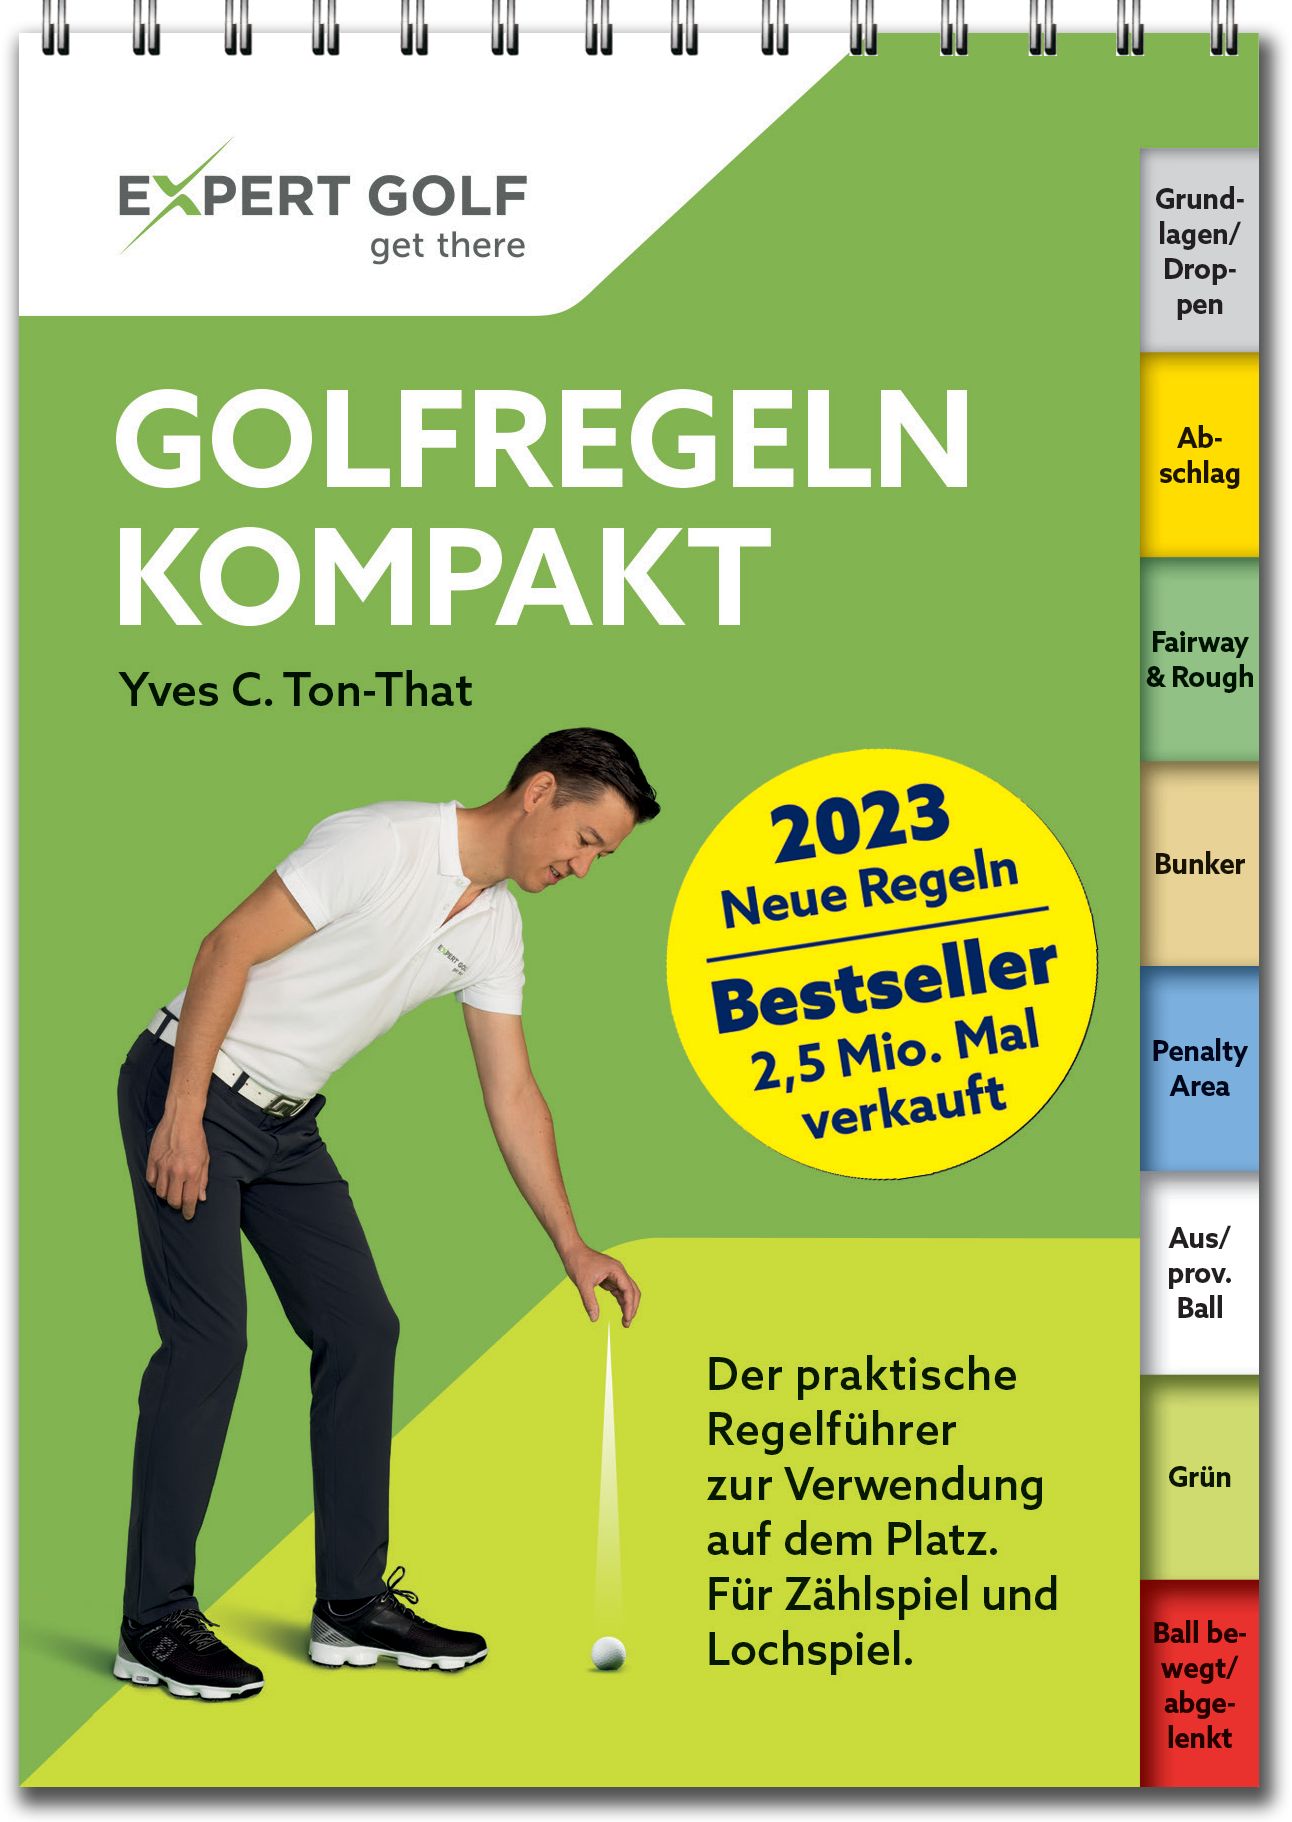 Golfregeln kompakt ((Foto: Yves C. Ton-That)